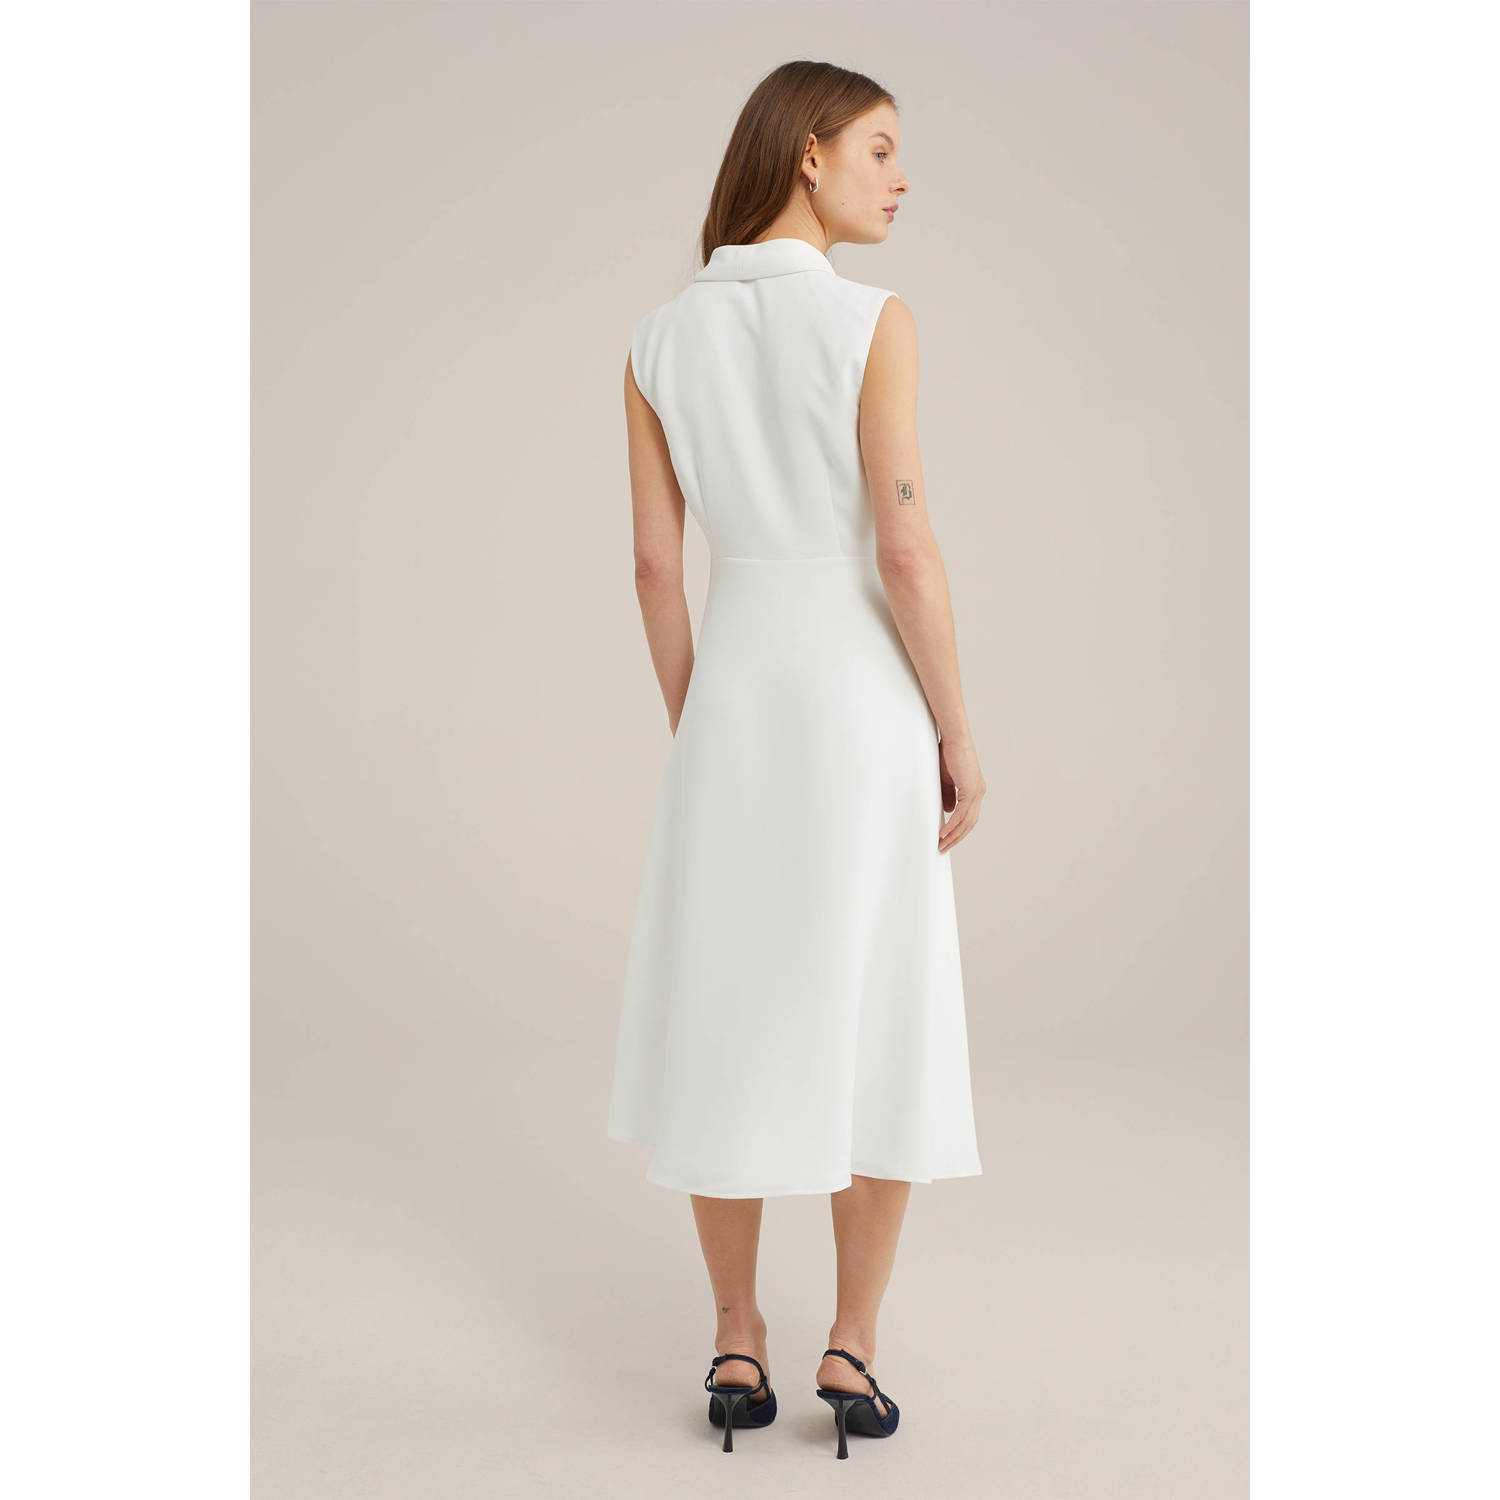 WE Fashion A-lijn jurk blanc